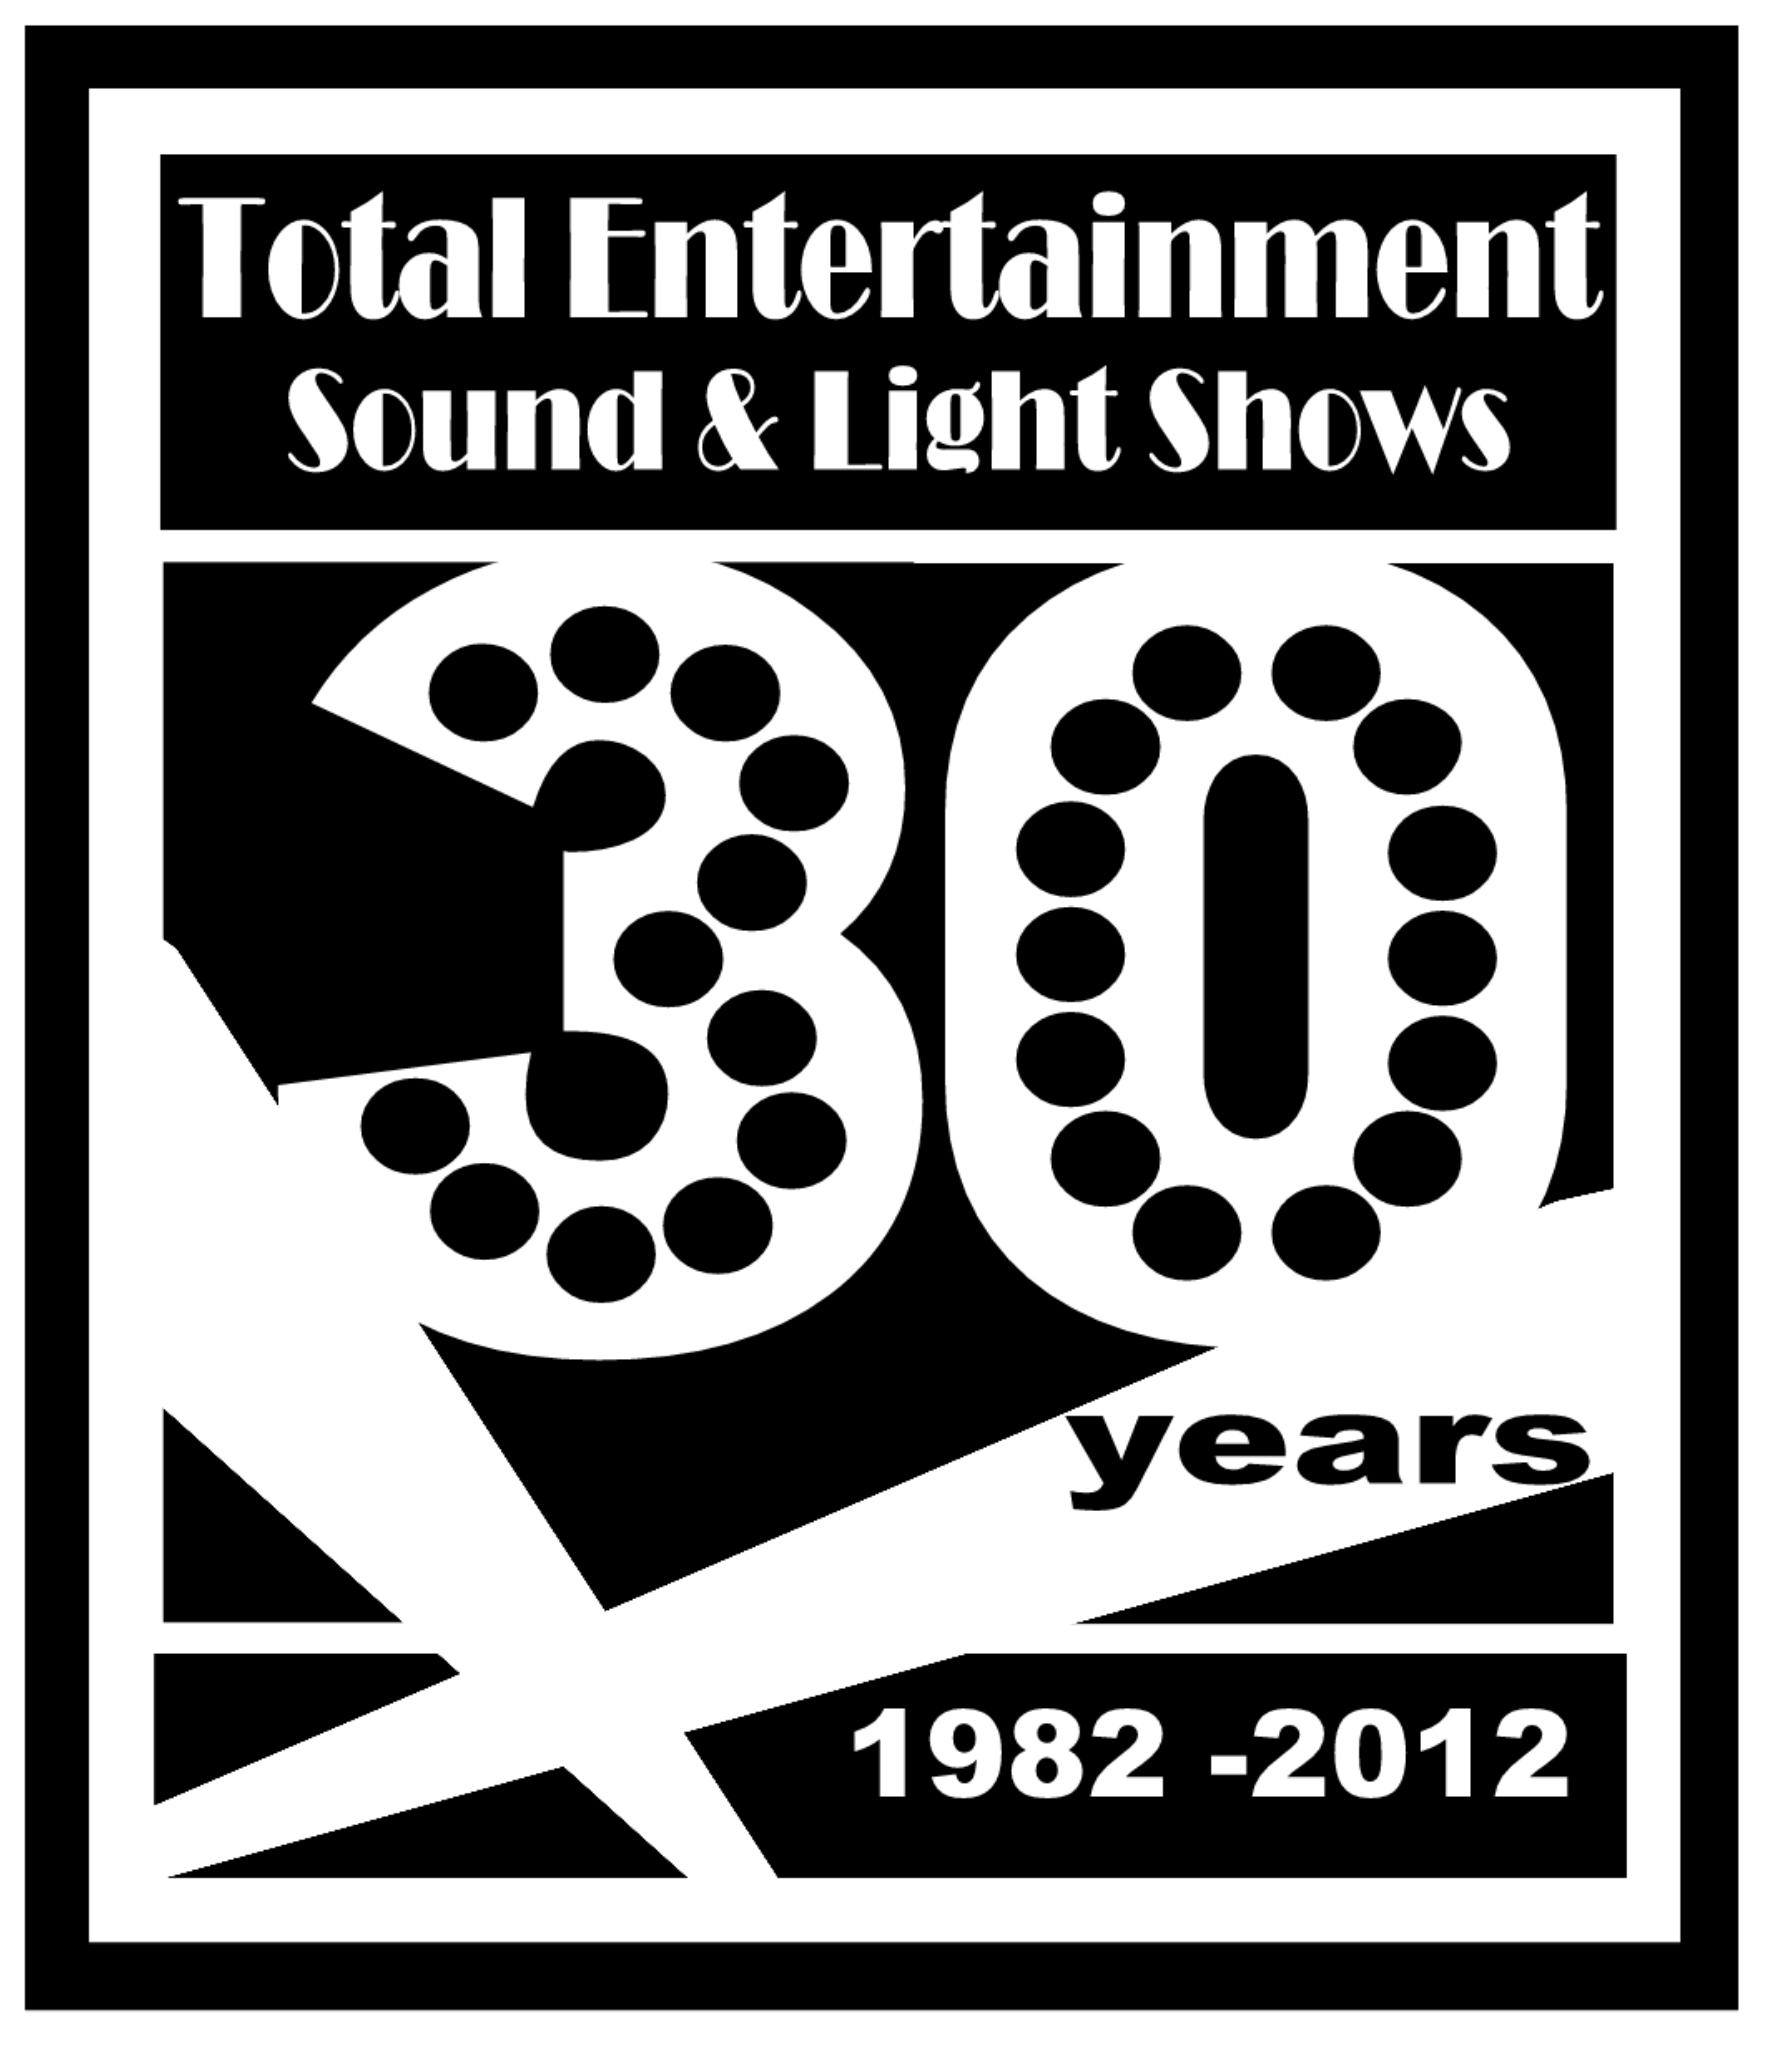 Total Entertainment 30 Years in the Bar / Bat Mitzvah DJ Scene!